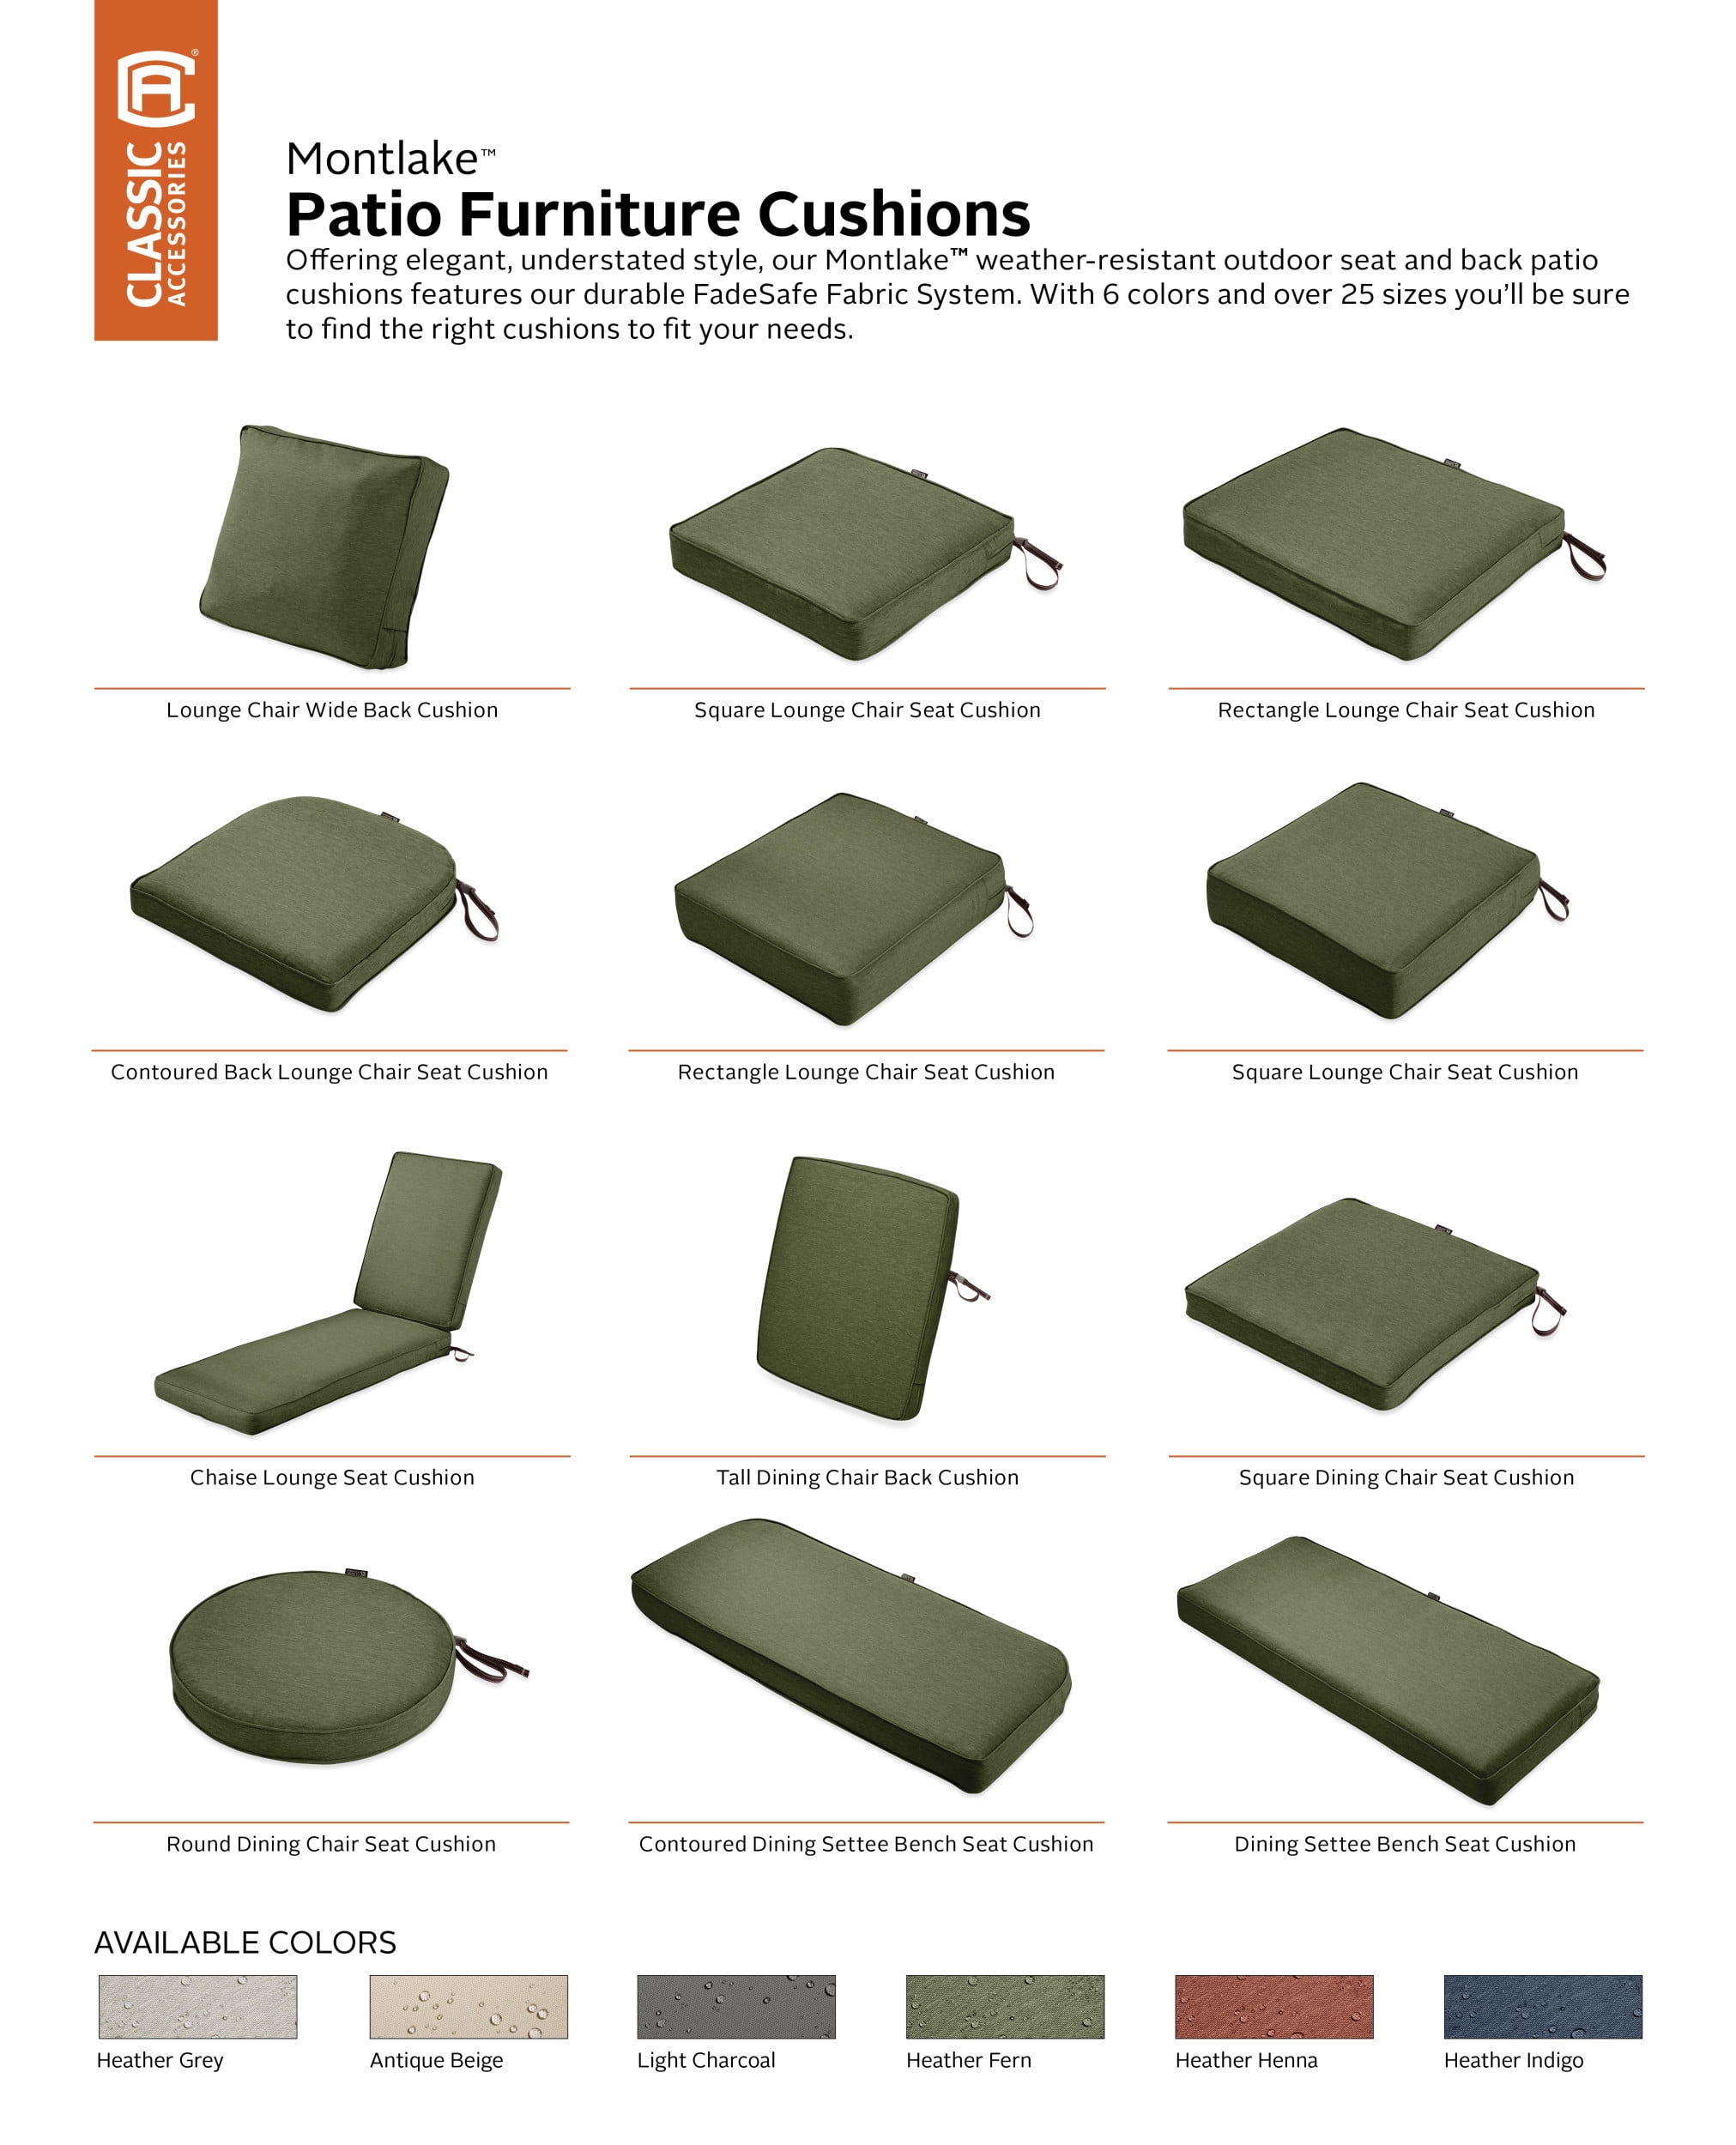 23 x 45 Montlake FadeSafe Patio Lounge Chair Cushion Set Heather Gray -  Classic Accessories